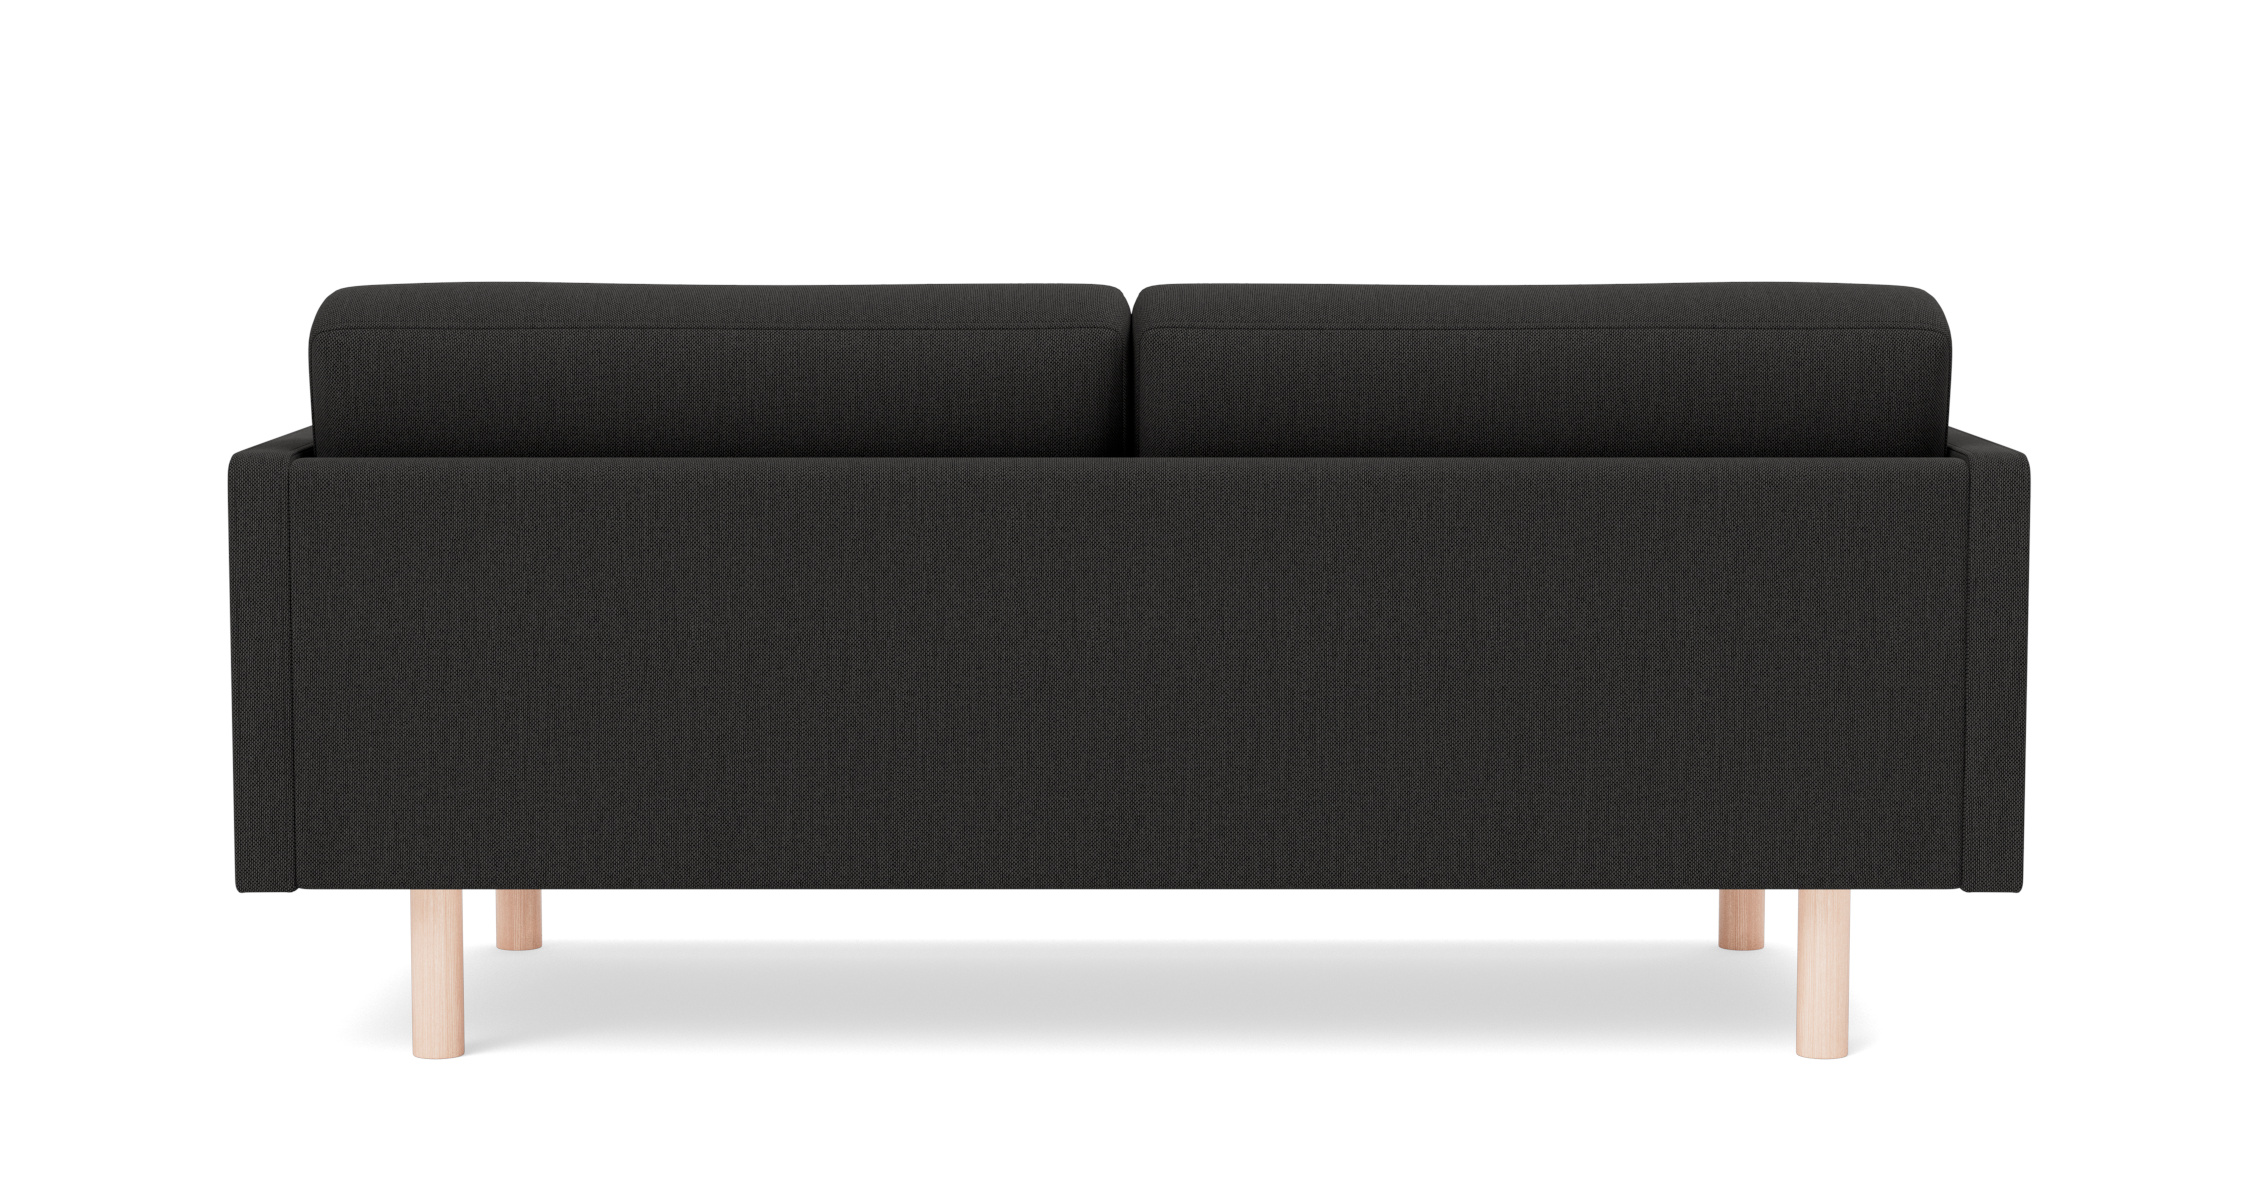 EJ220 Sofa 2-Sitzer, 86 cm, eiche geseift / erik, 3790 linen